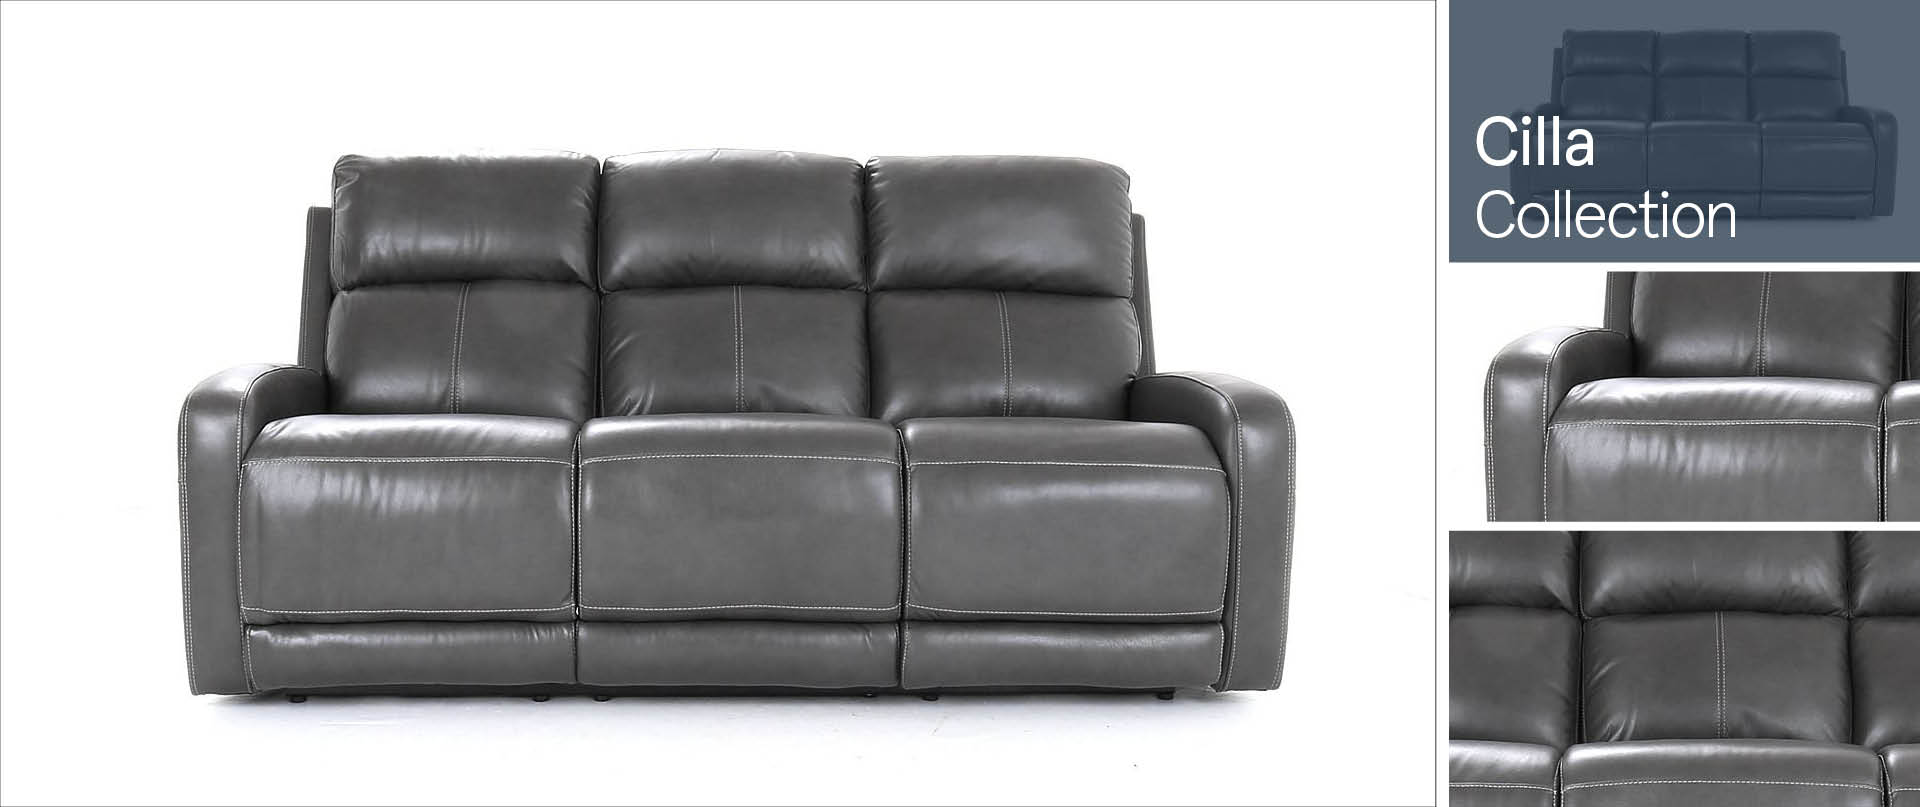 Cilla Leather Sofa Ranges